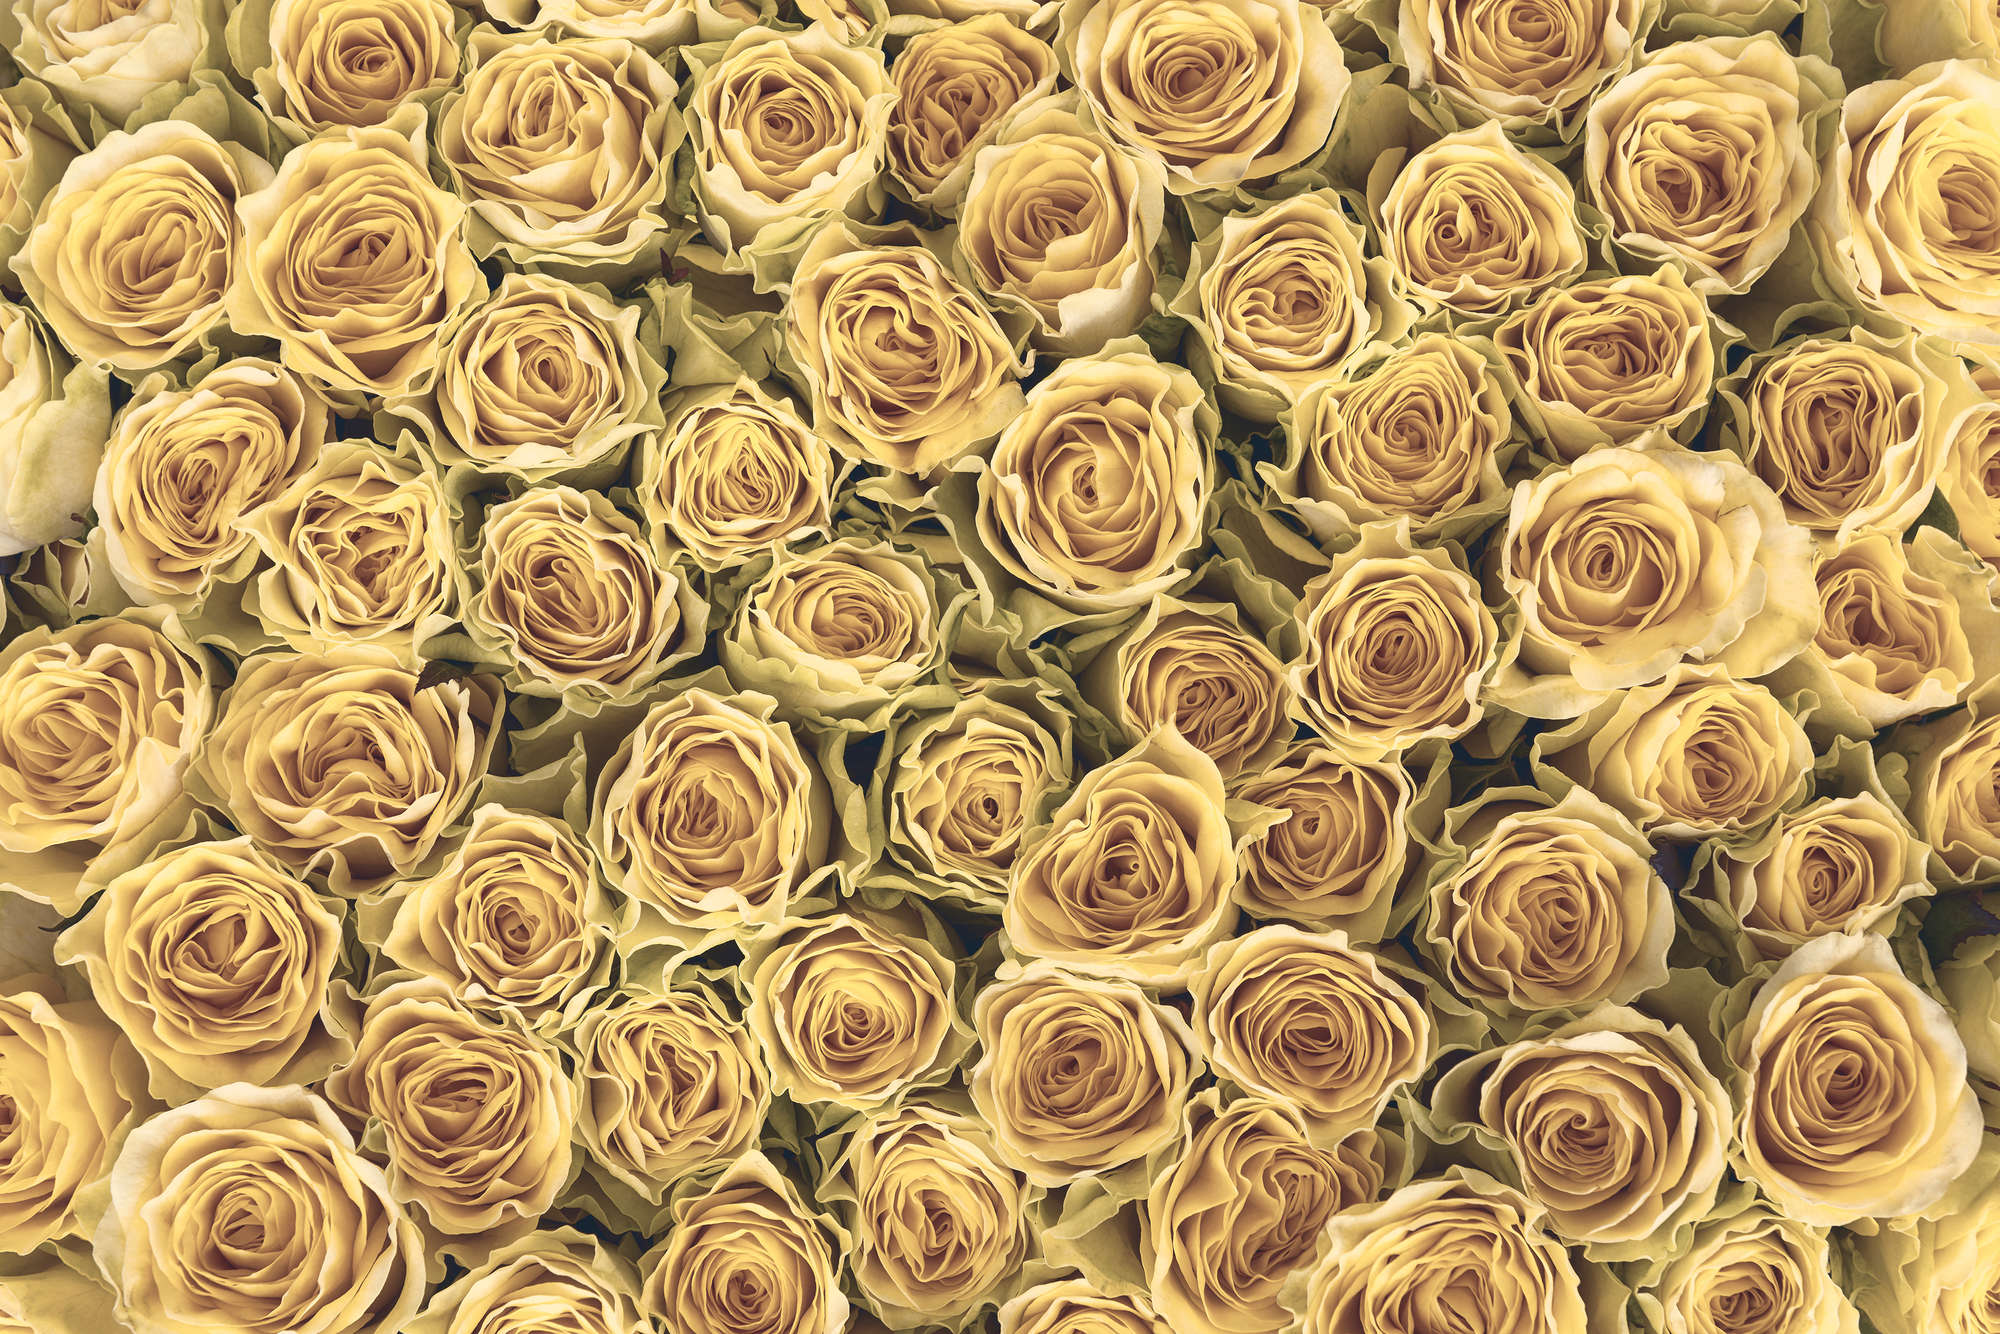             Plants mural golden roses on premium smooth fleece
        